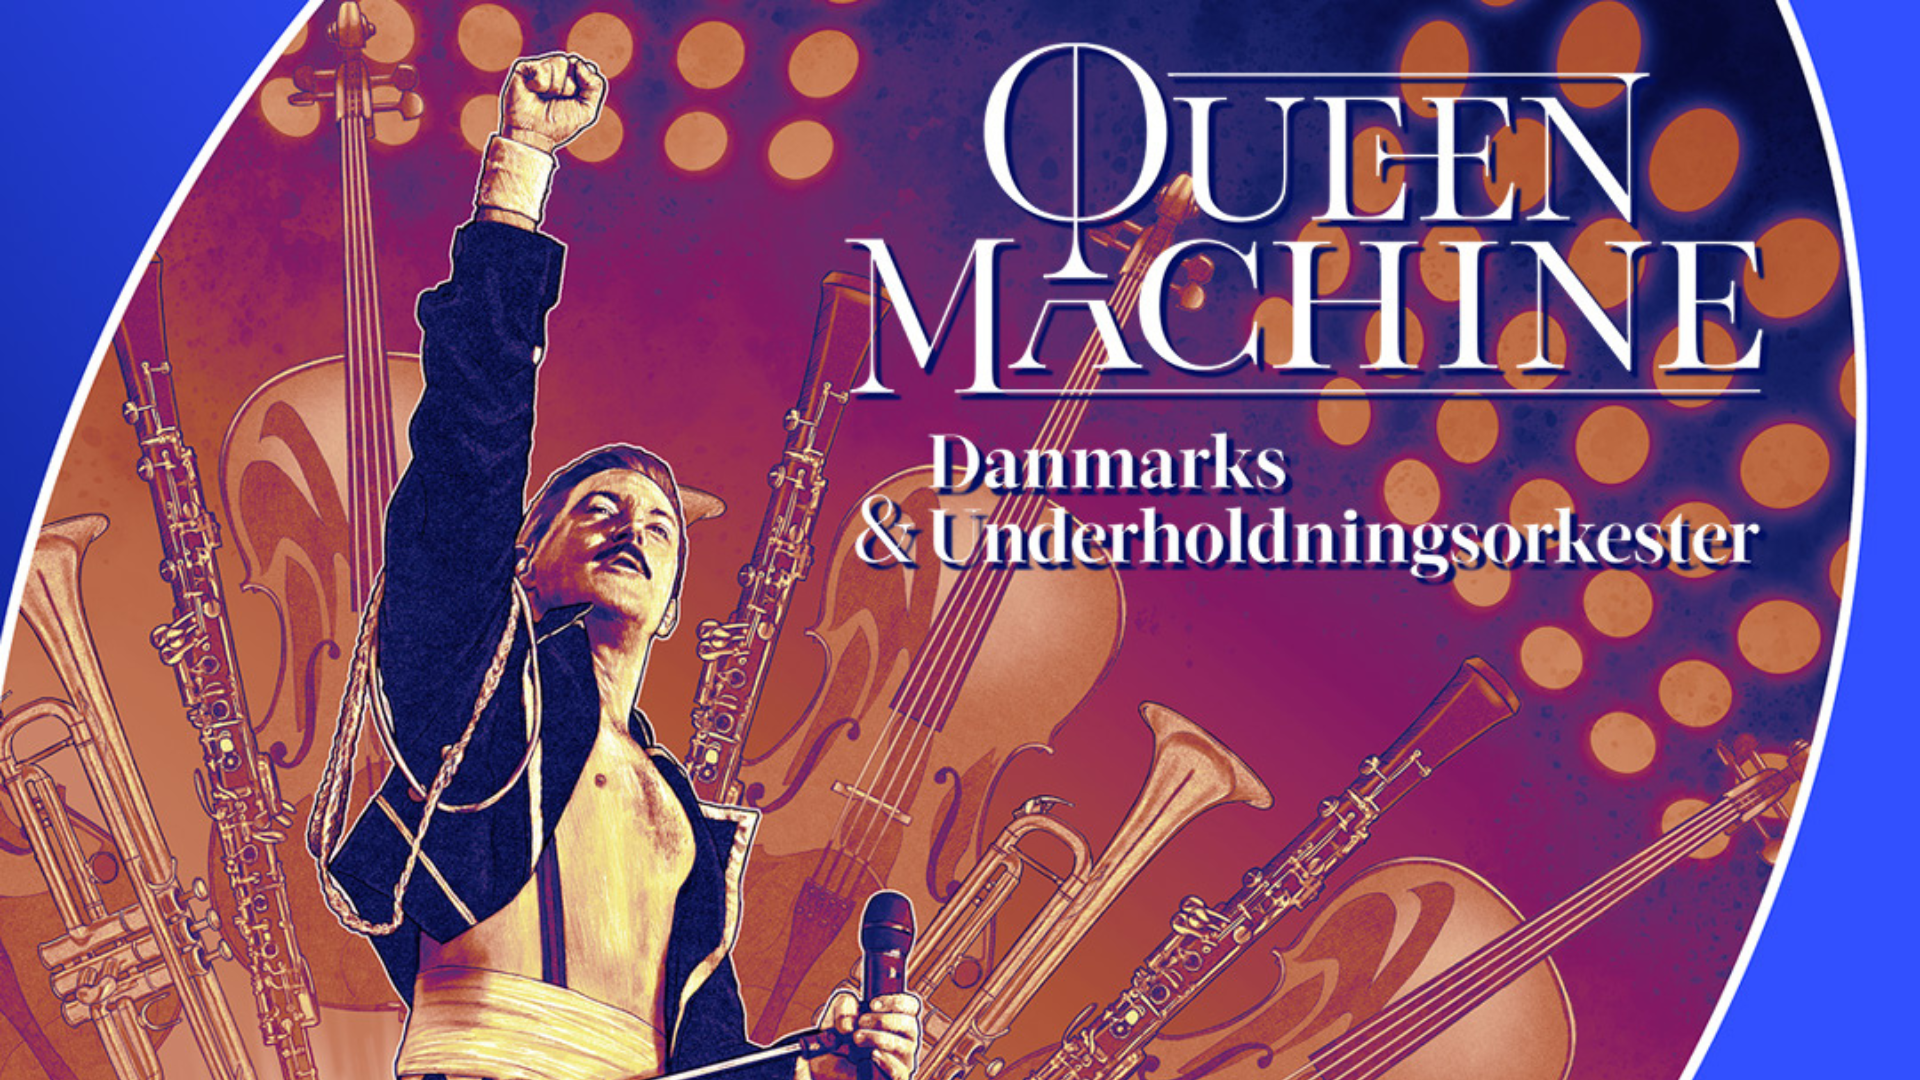 Queen Machine & Danmarks Underholdningsorkester Jyske Bank Arena, Odense